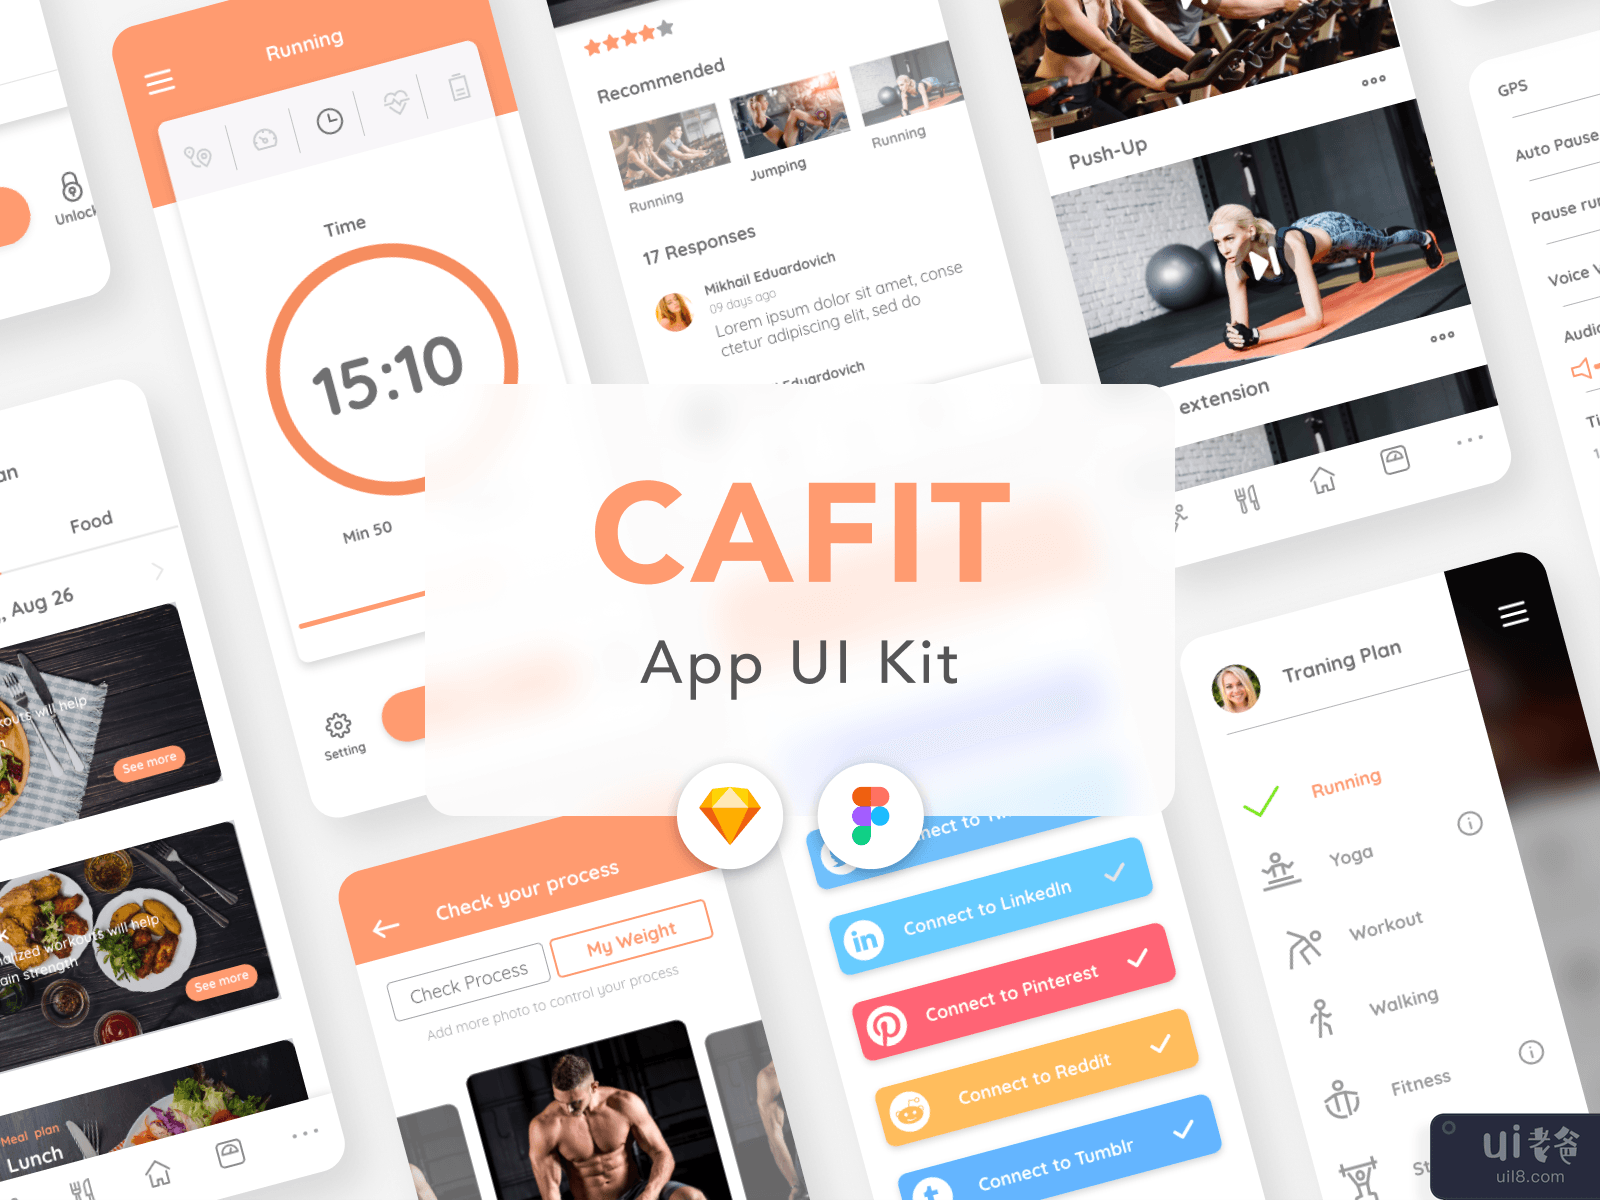 Cafit Workout UI Kit #8